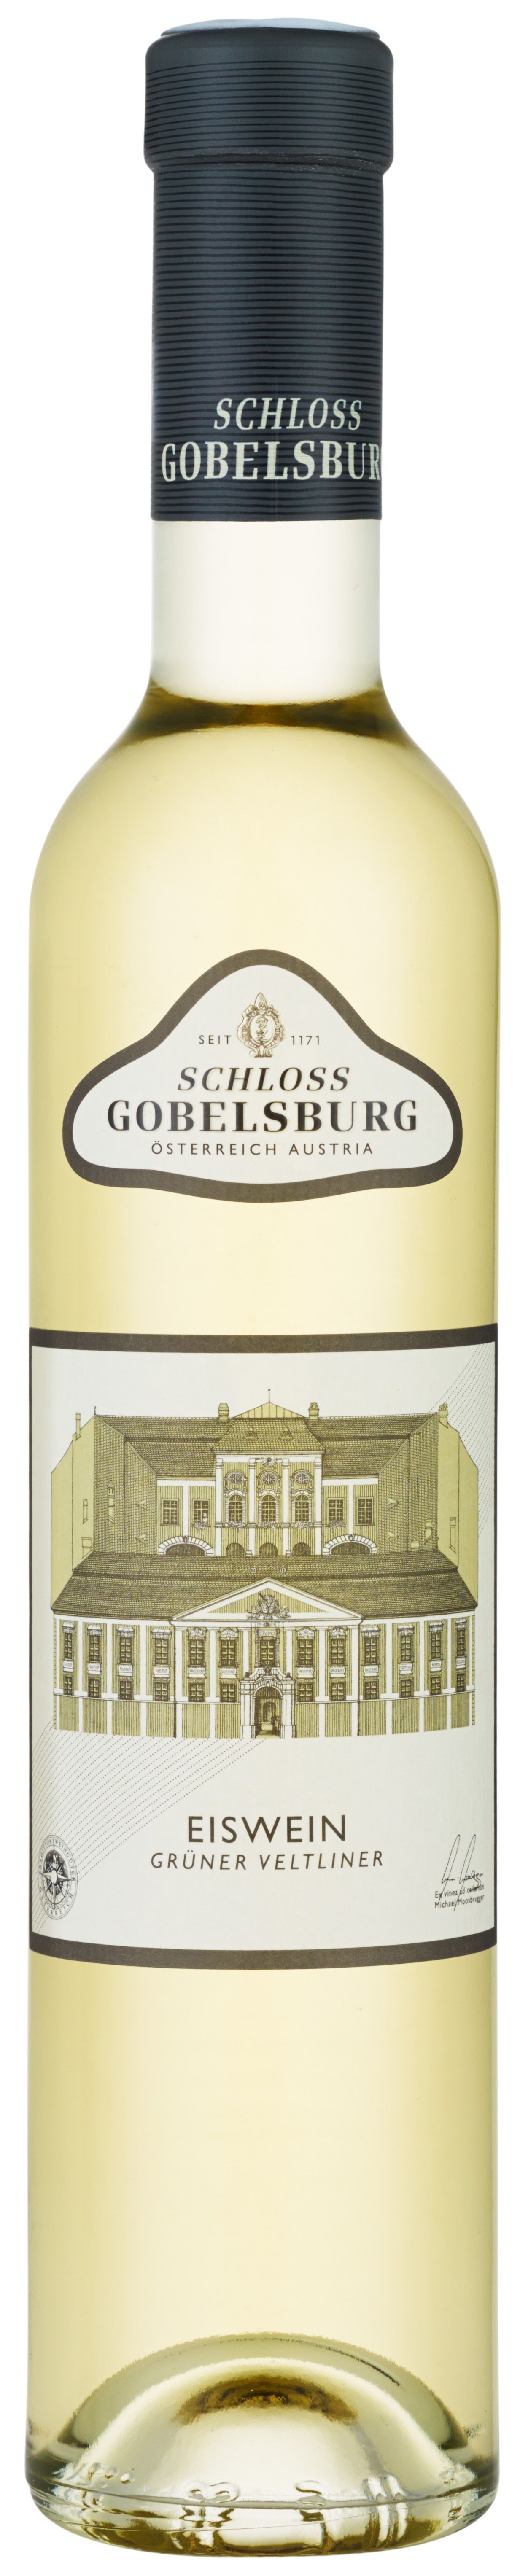 Schloss Gobelsburg, Gruner Veltliner Eiswein, 2016